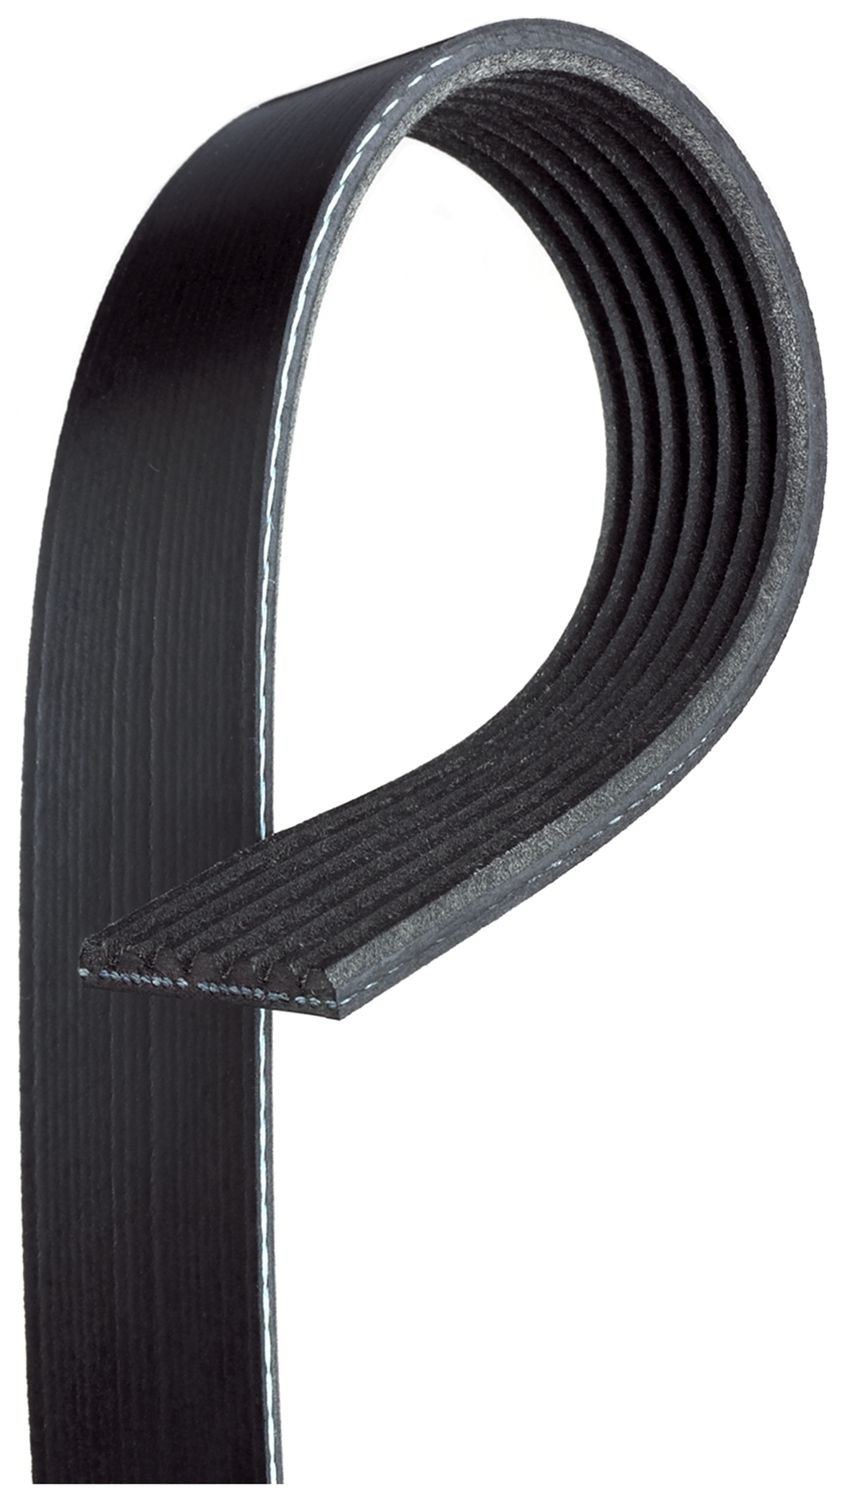 GATES 7PK1730 Serpentine belt 1730mm, 7, G-Force™ C12™ CVT Belt